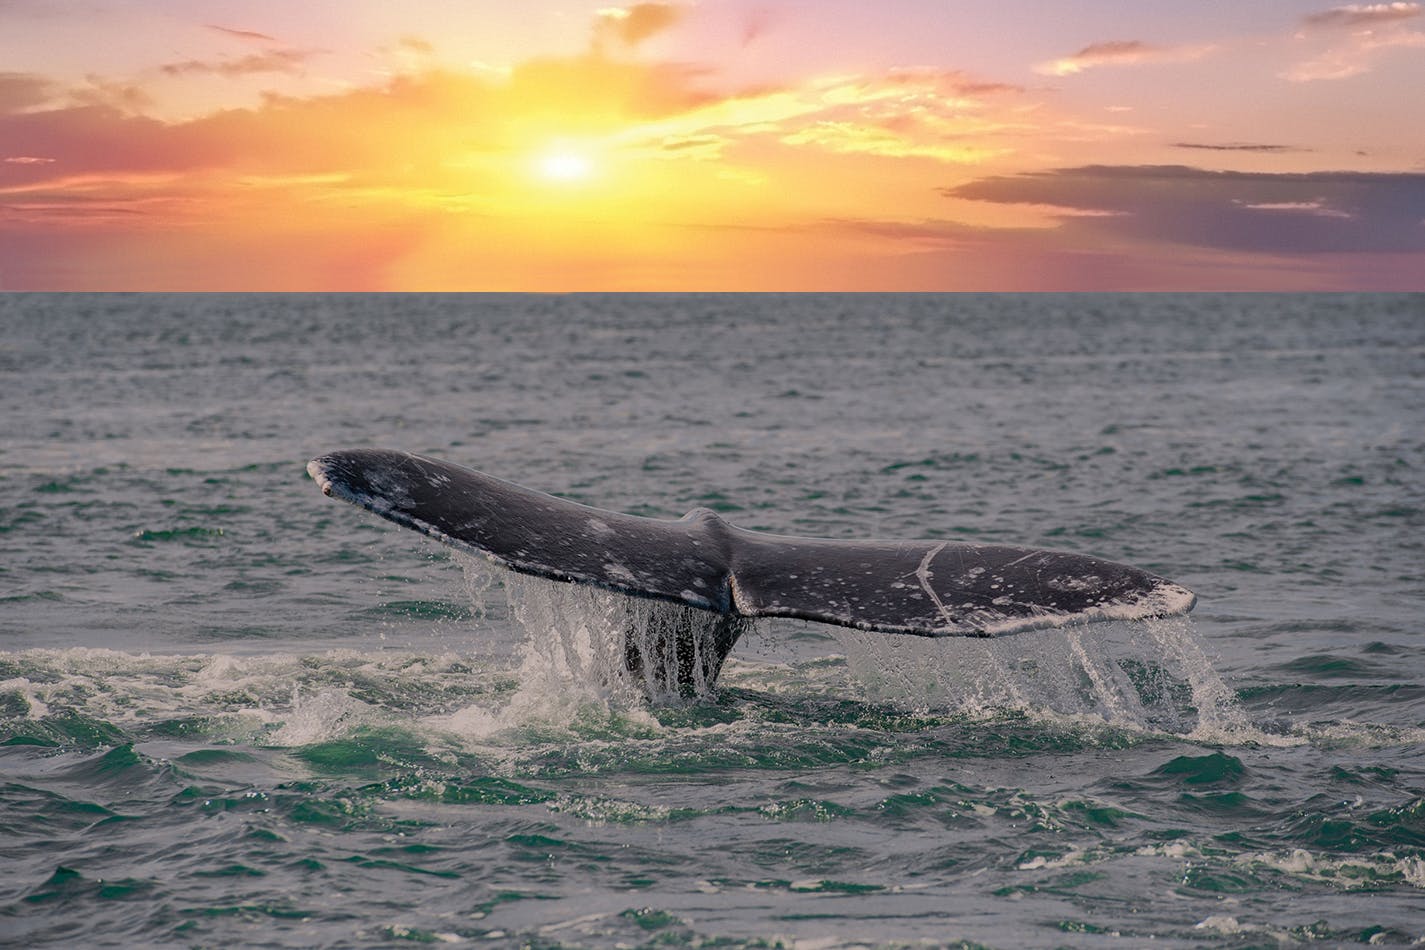 Annual Whale Migration / Whale Festivals